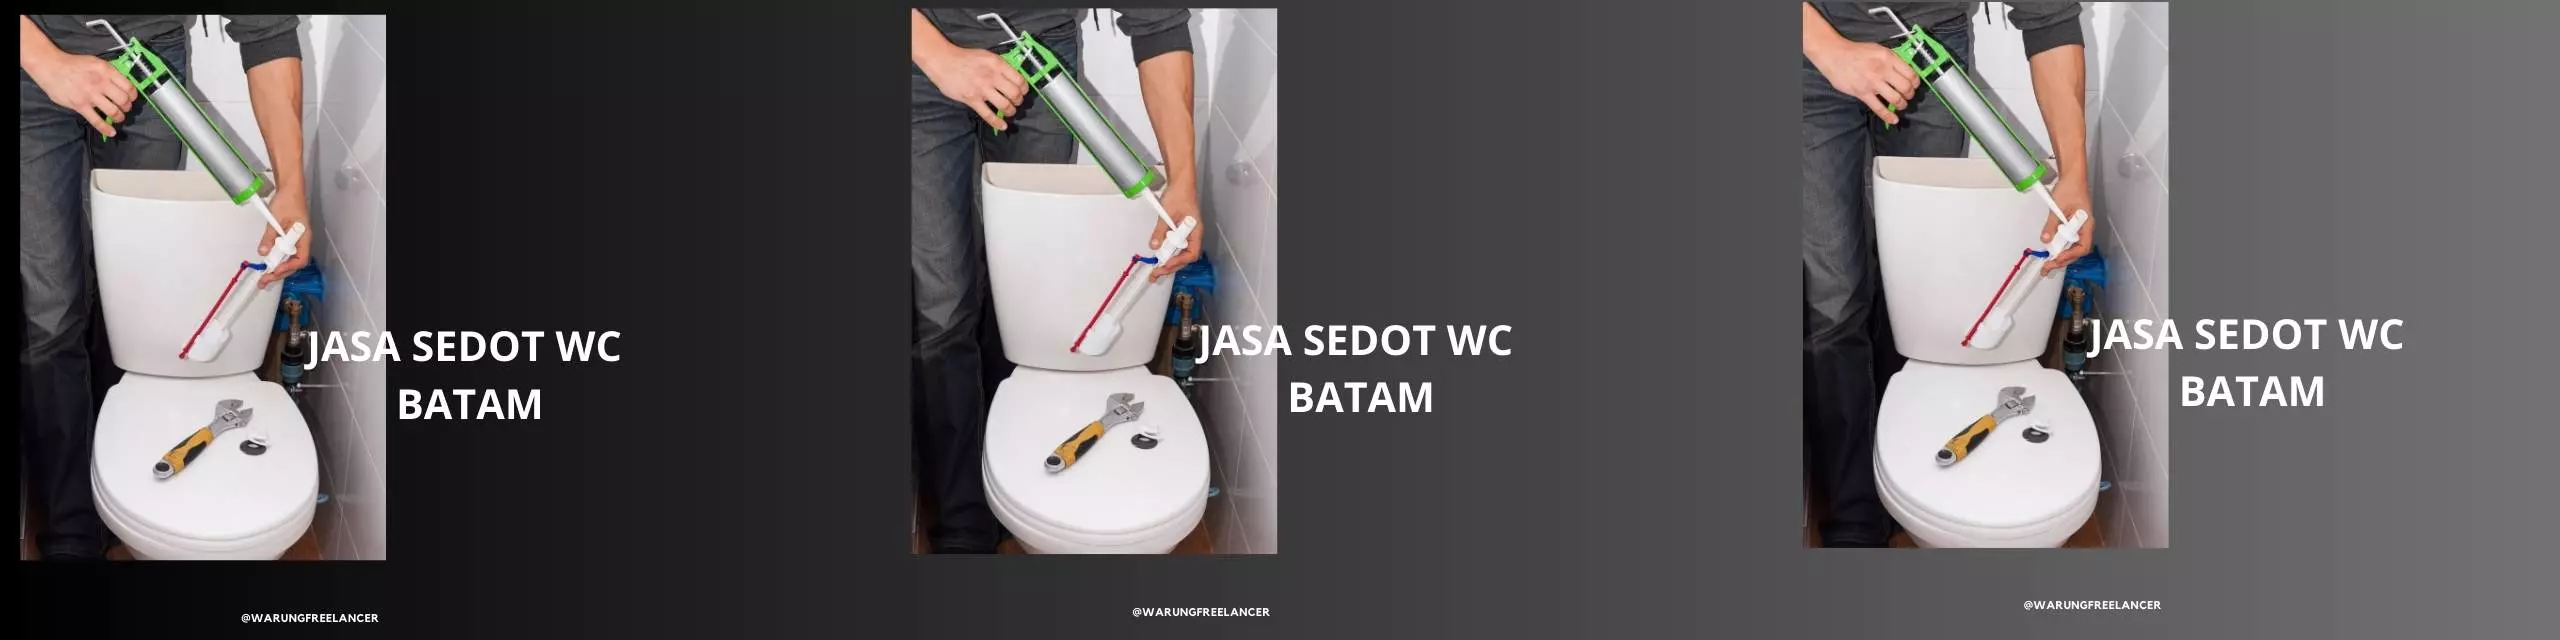 Jasa Sedot WC Batam